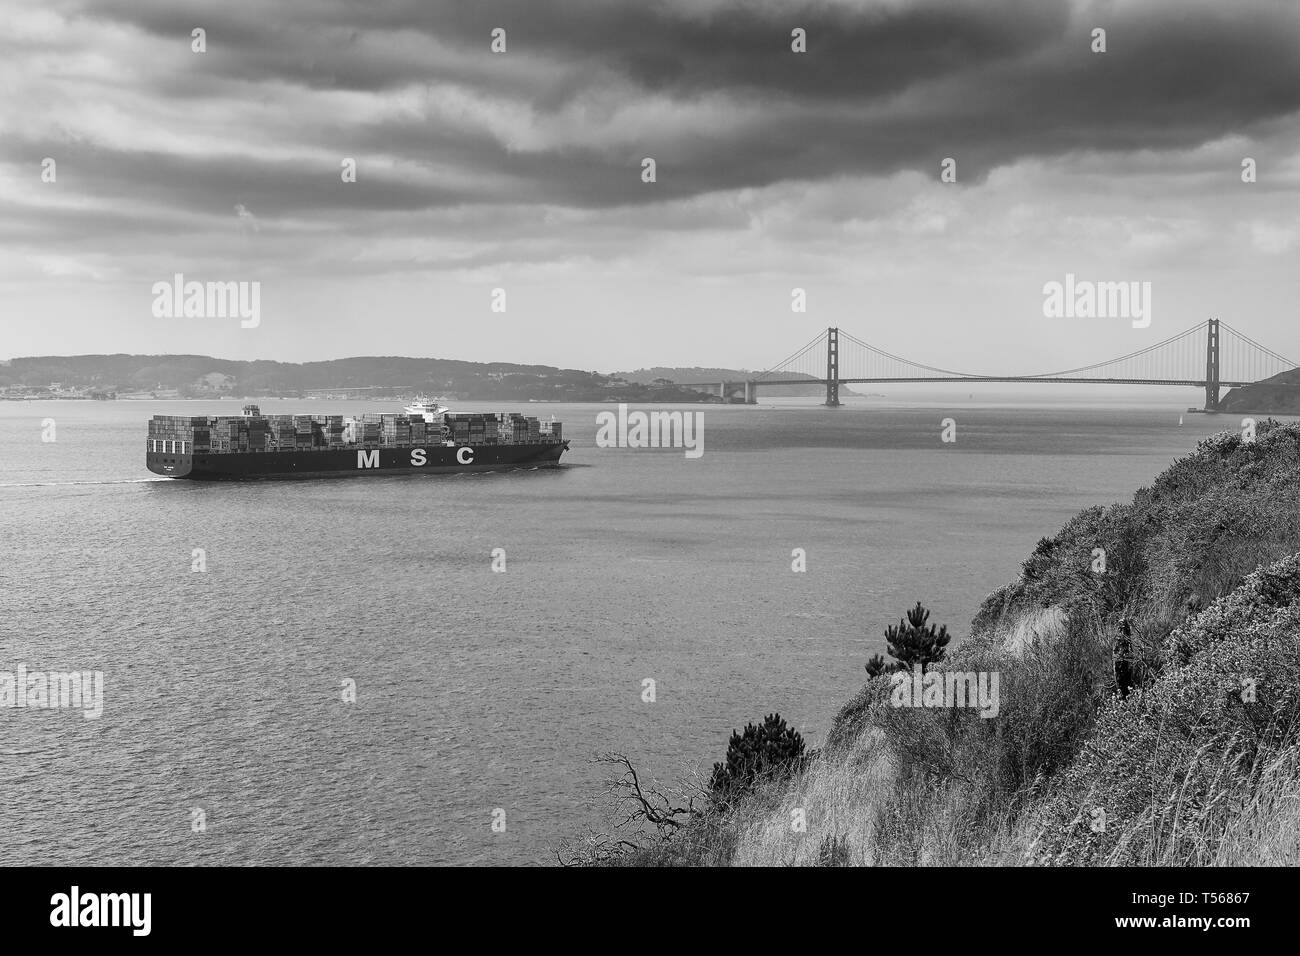 Moody Black and White Photo Of The Container Ship, MSC ARIANE, Steaming Through San Francisco Bay Towards The Golden Gate Bridge, California, USA. Stock Photo